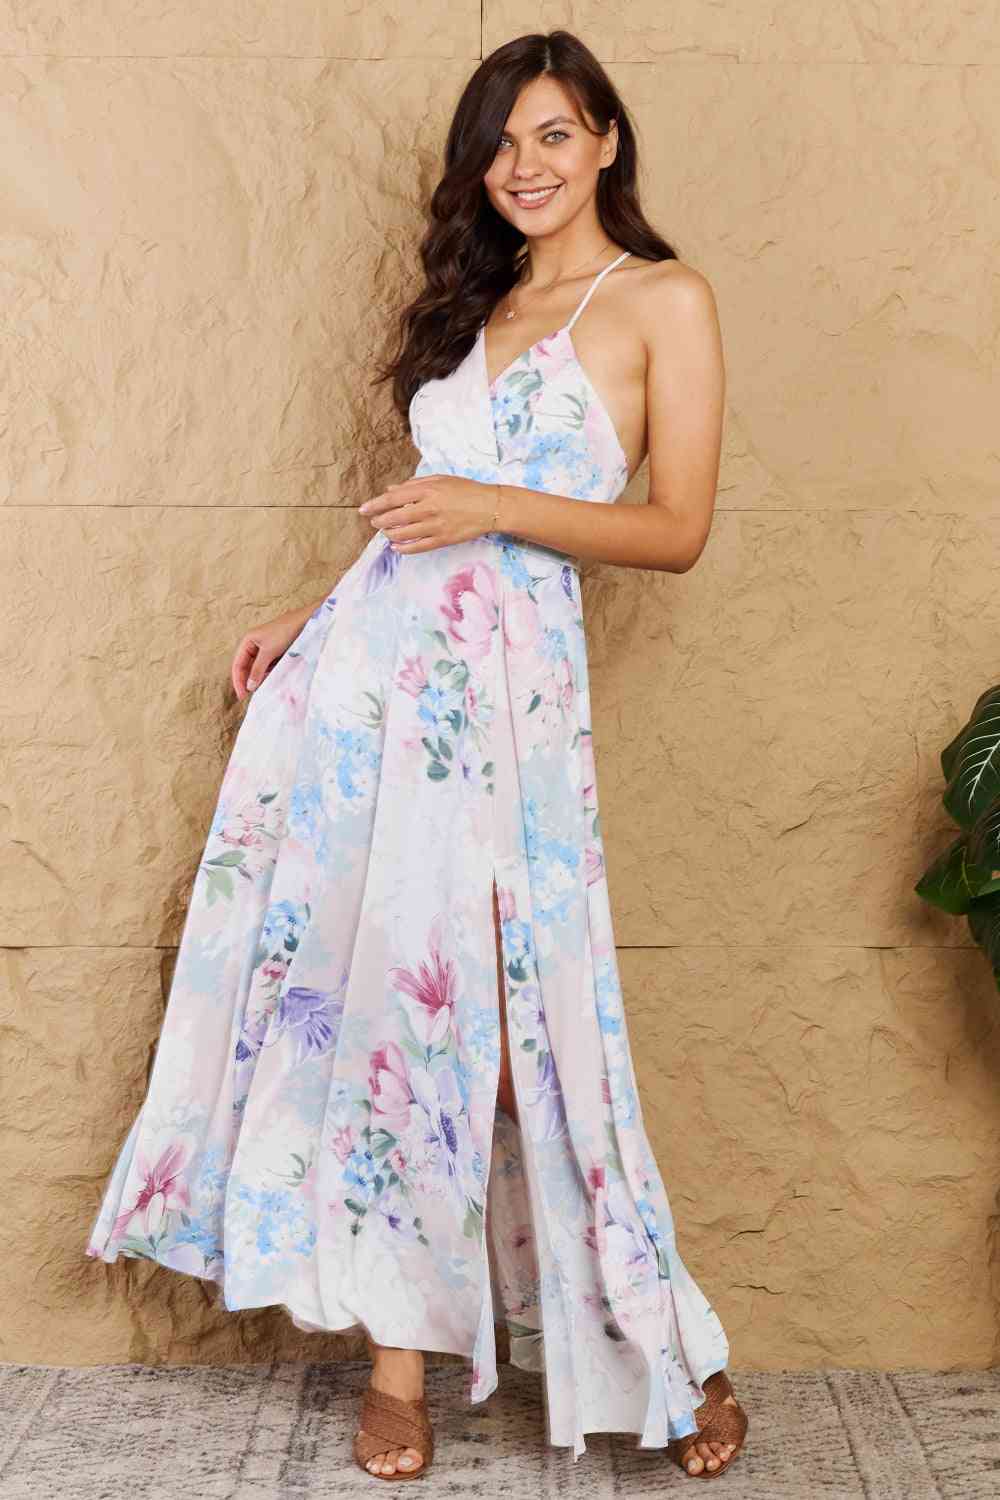 OneTheLand Colorful Floral Print Sleeveless Maxi Dress